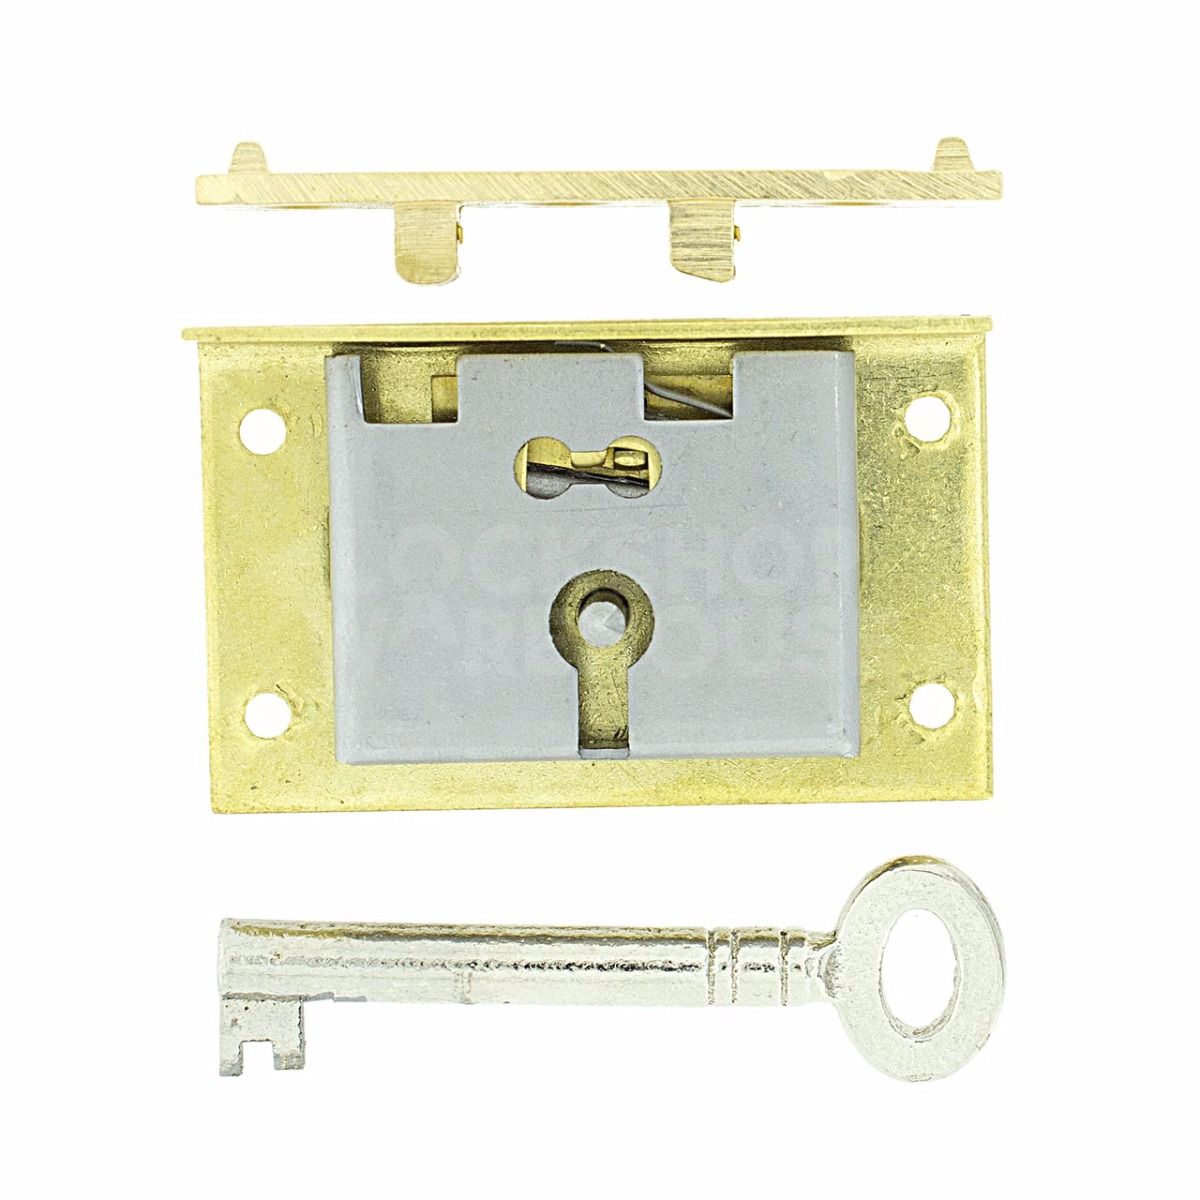 ASEC 1 lever Box Lock